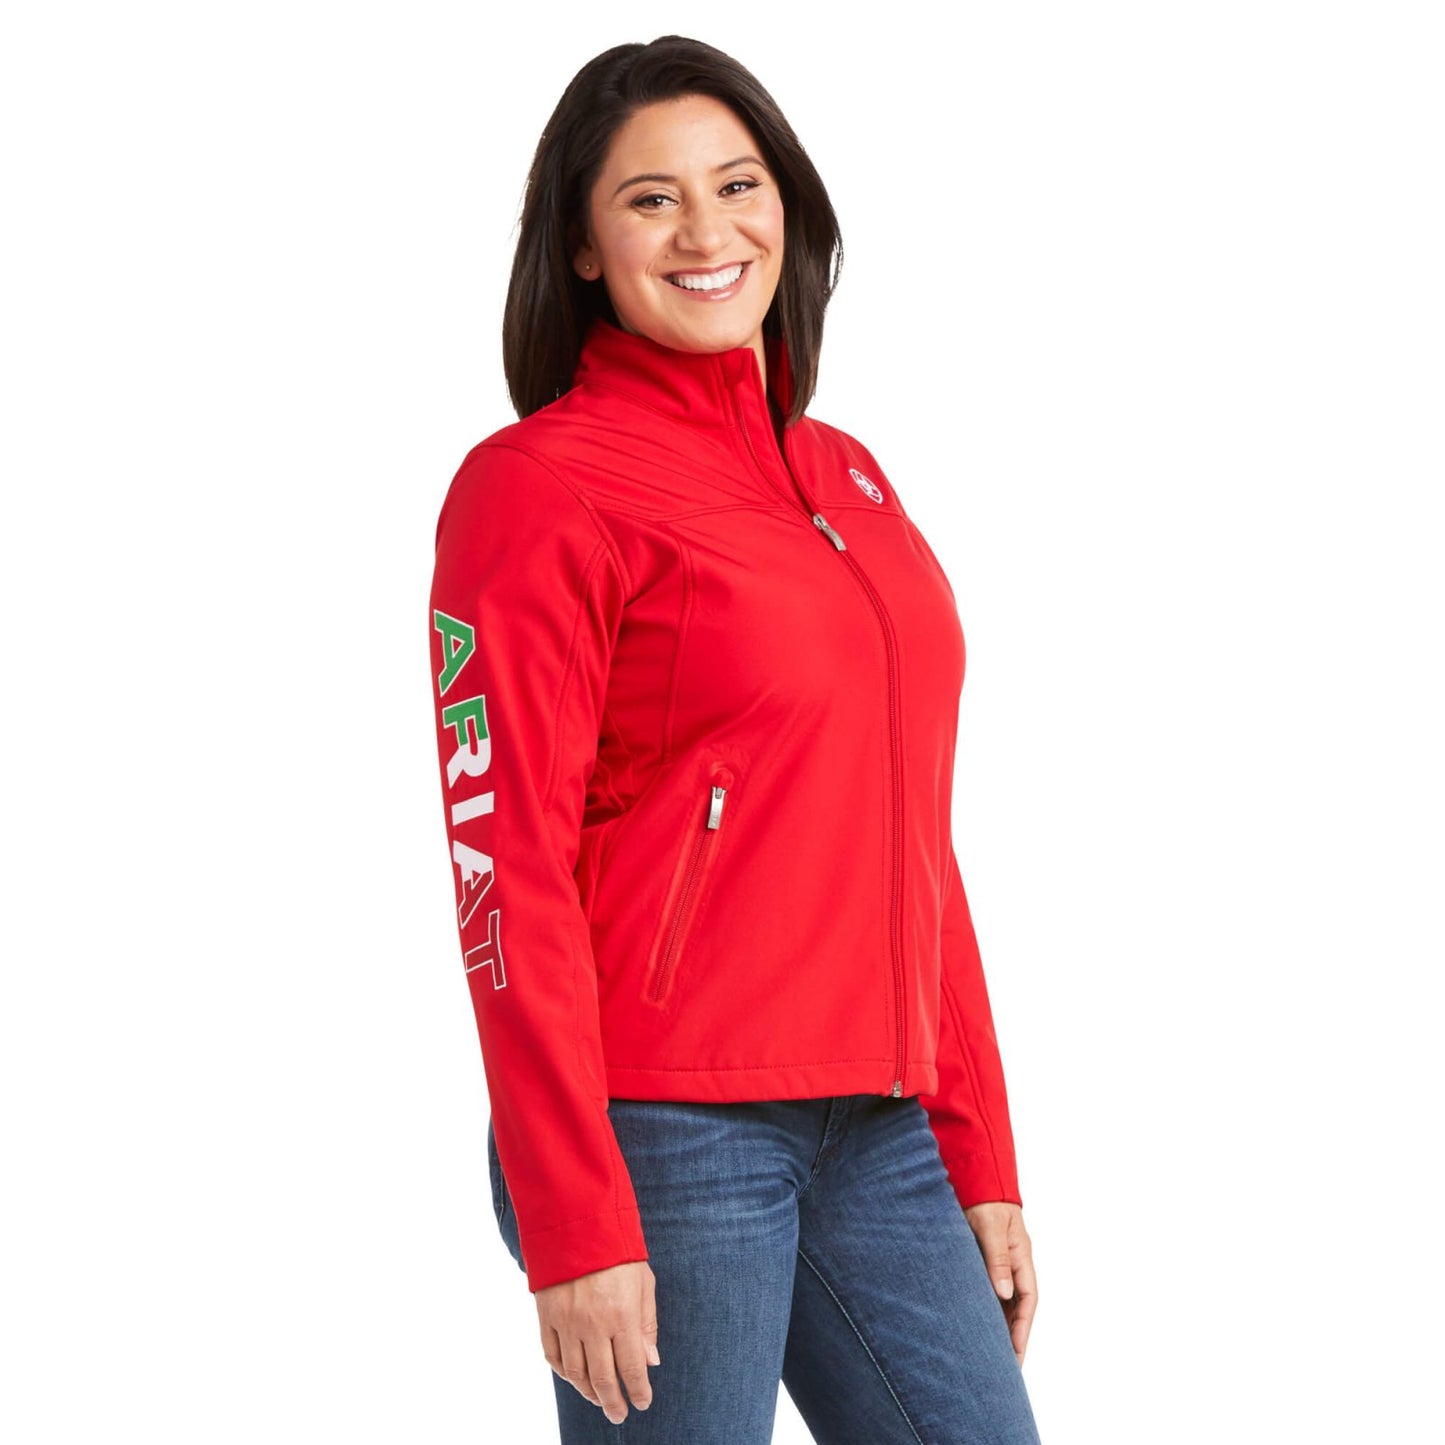 Ariat Mexico Flag Team Softshell Jacket - Red